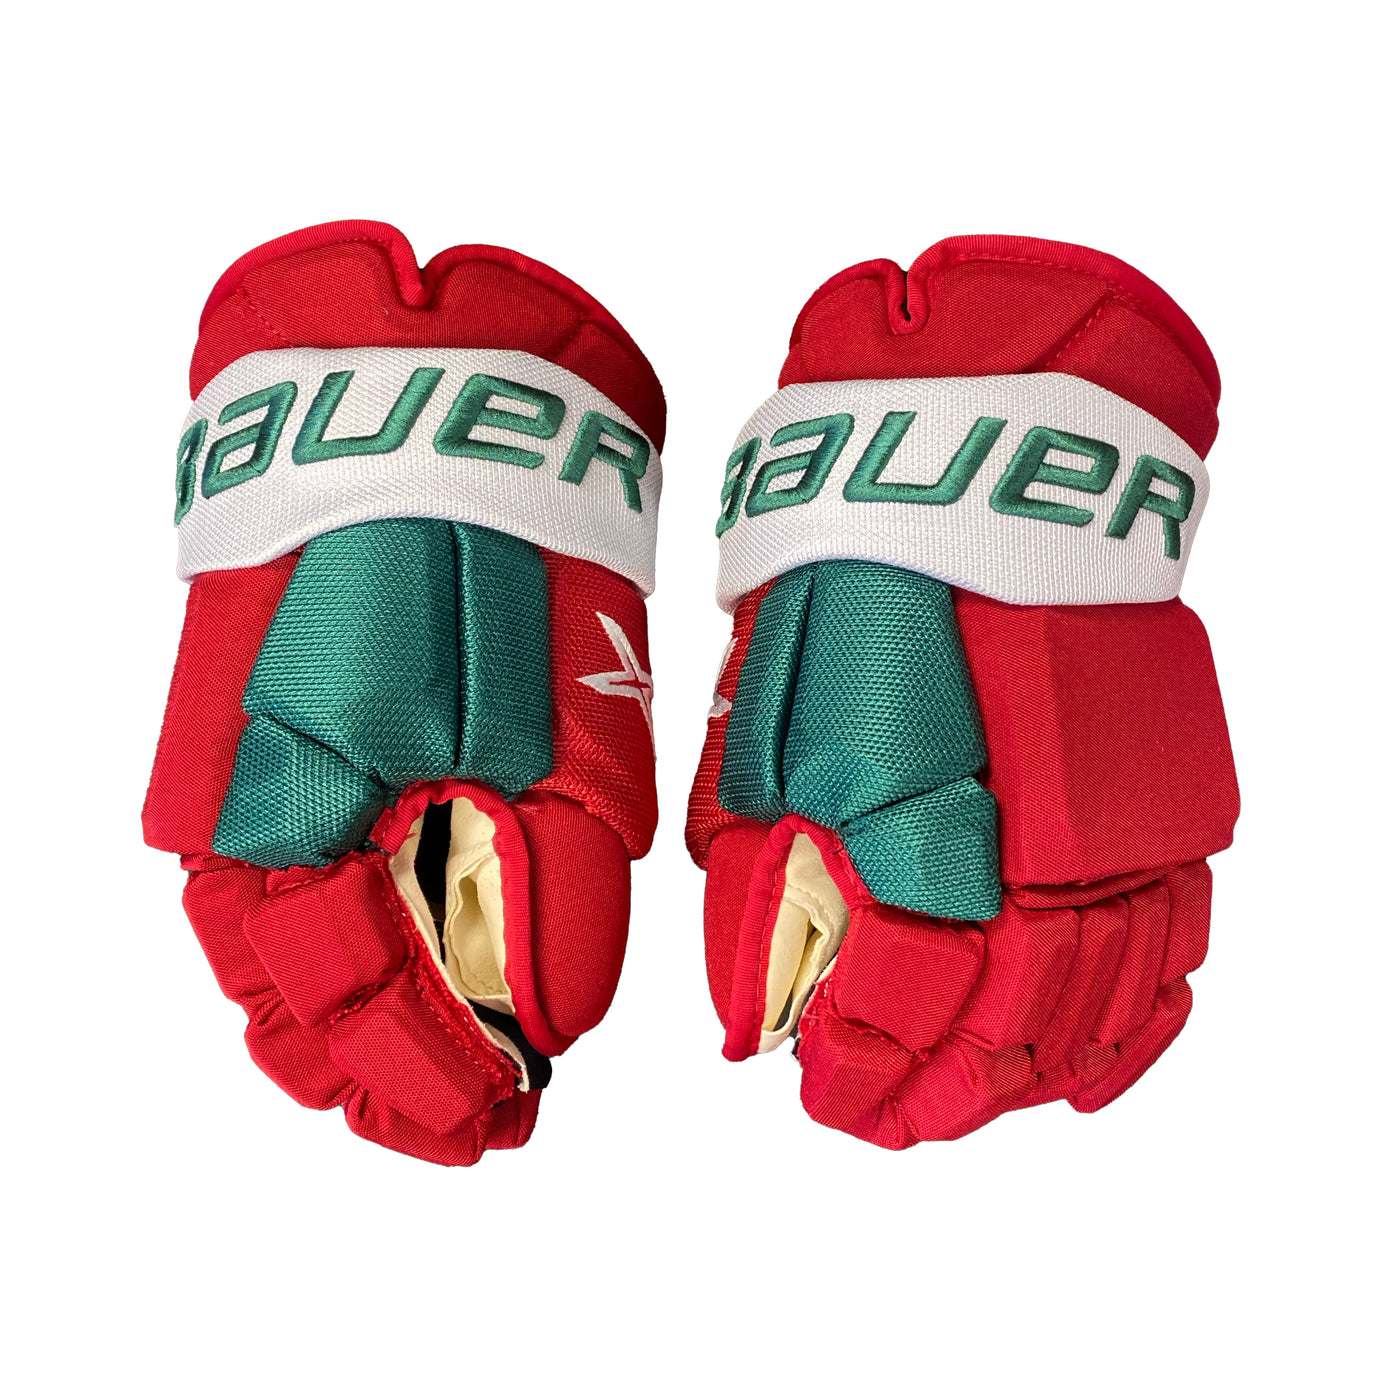 Bauer Vapor 2X Pro - Pro Stock Hockey Gloves - New Jersey Devils - Brendan Smith